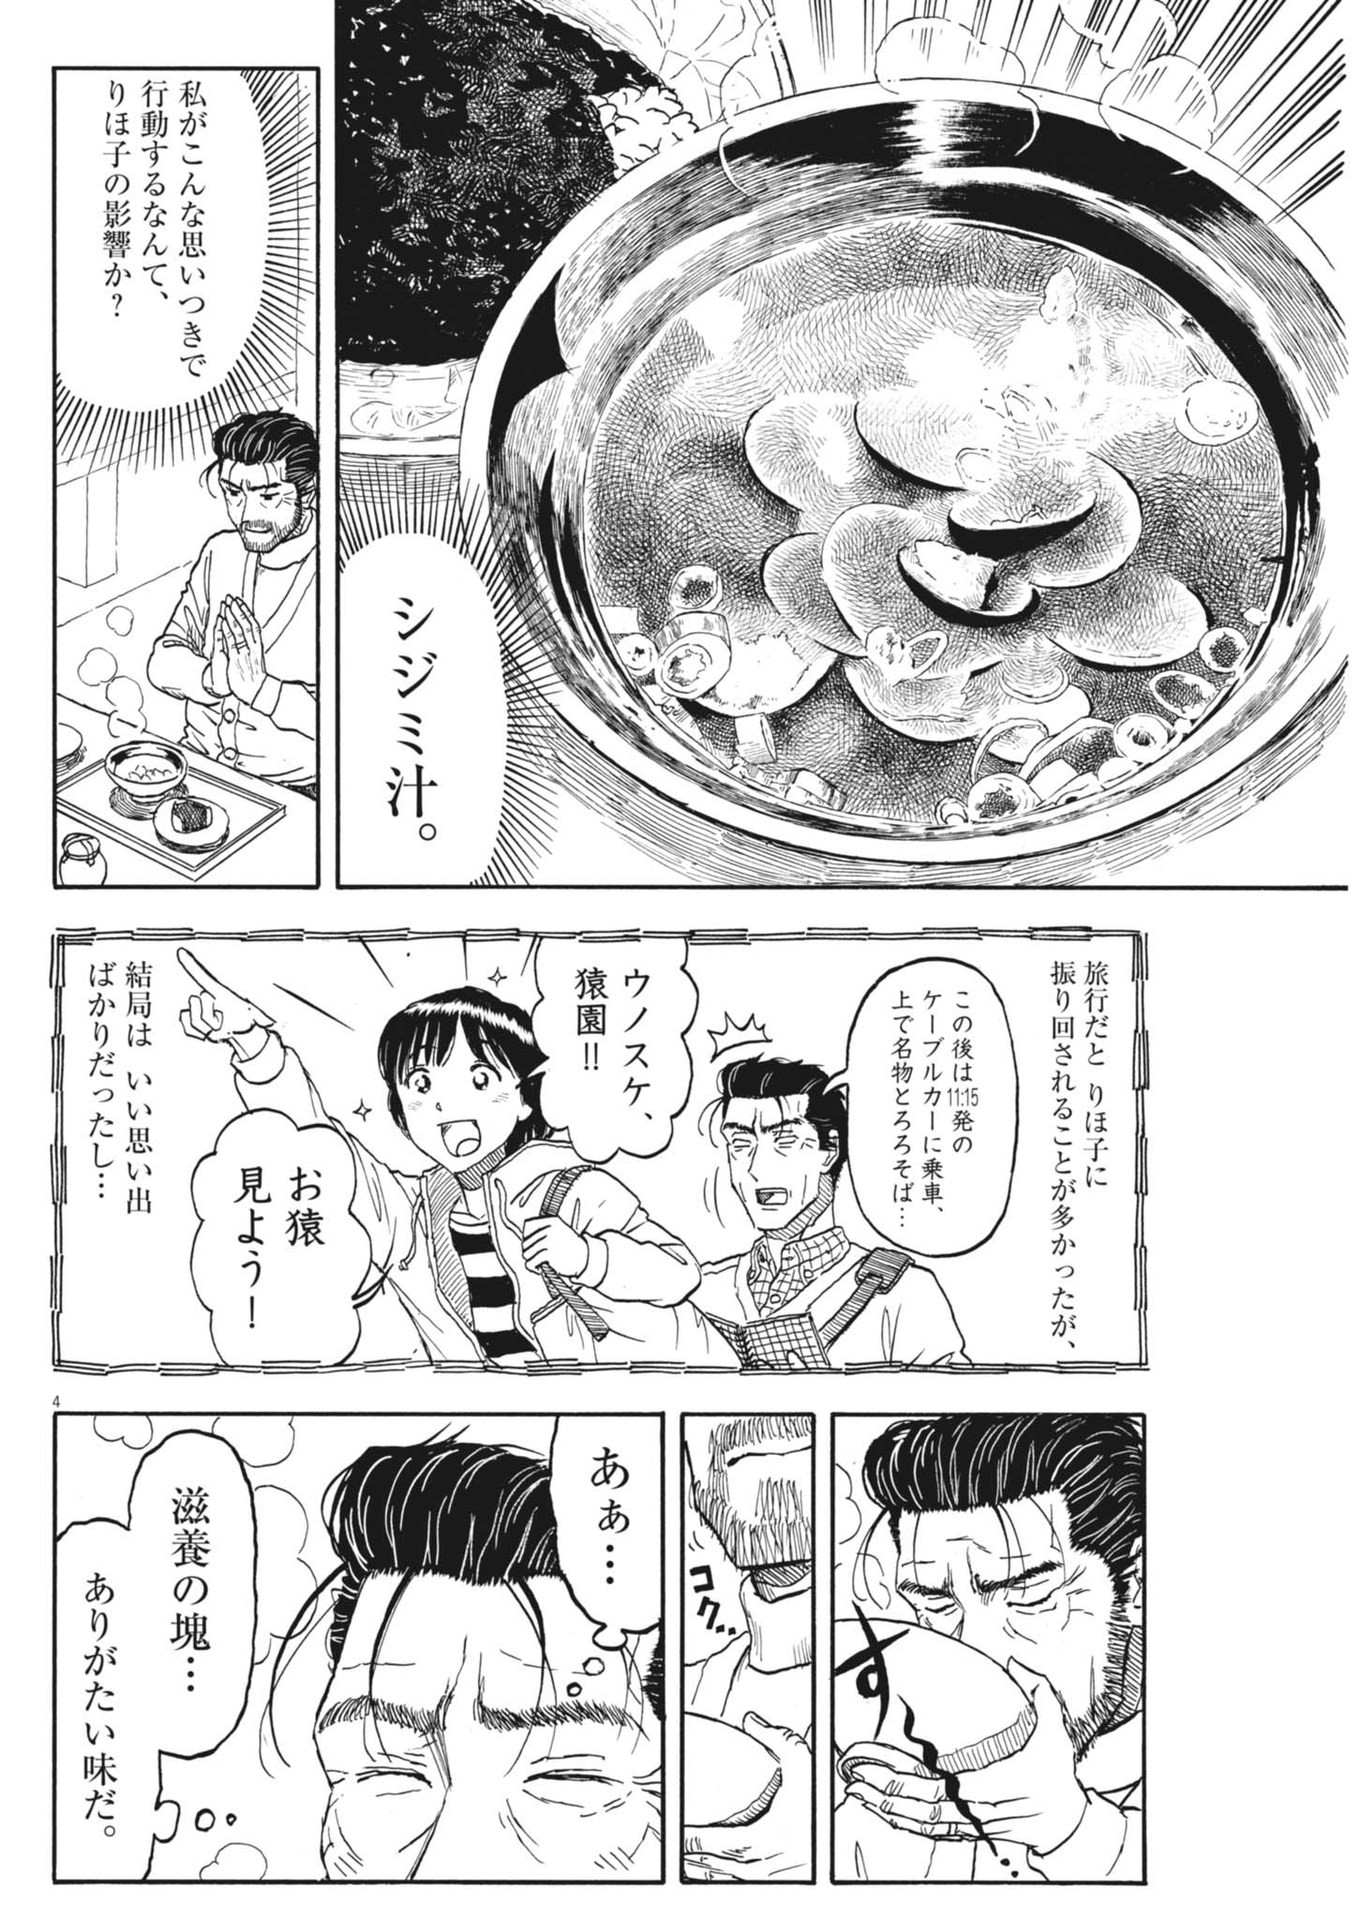 Komegura Fuufu no Recipe-chou - Chapter 36 - Page 4